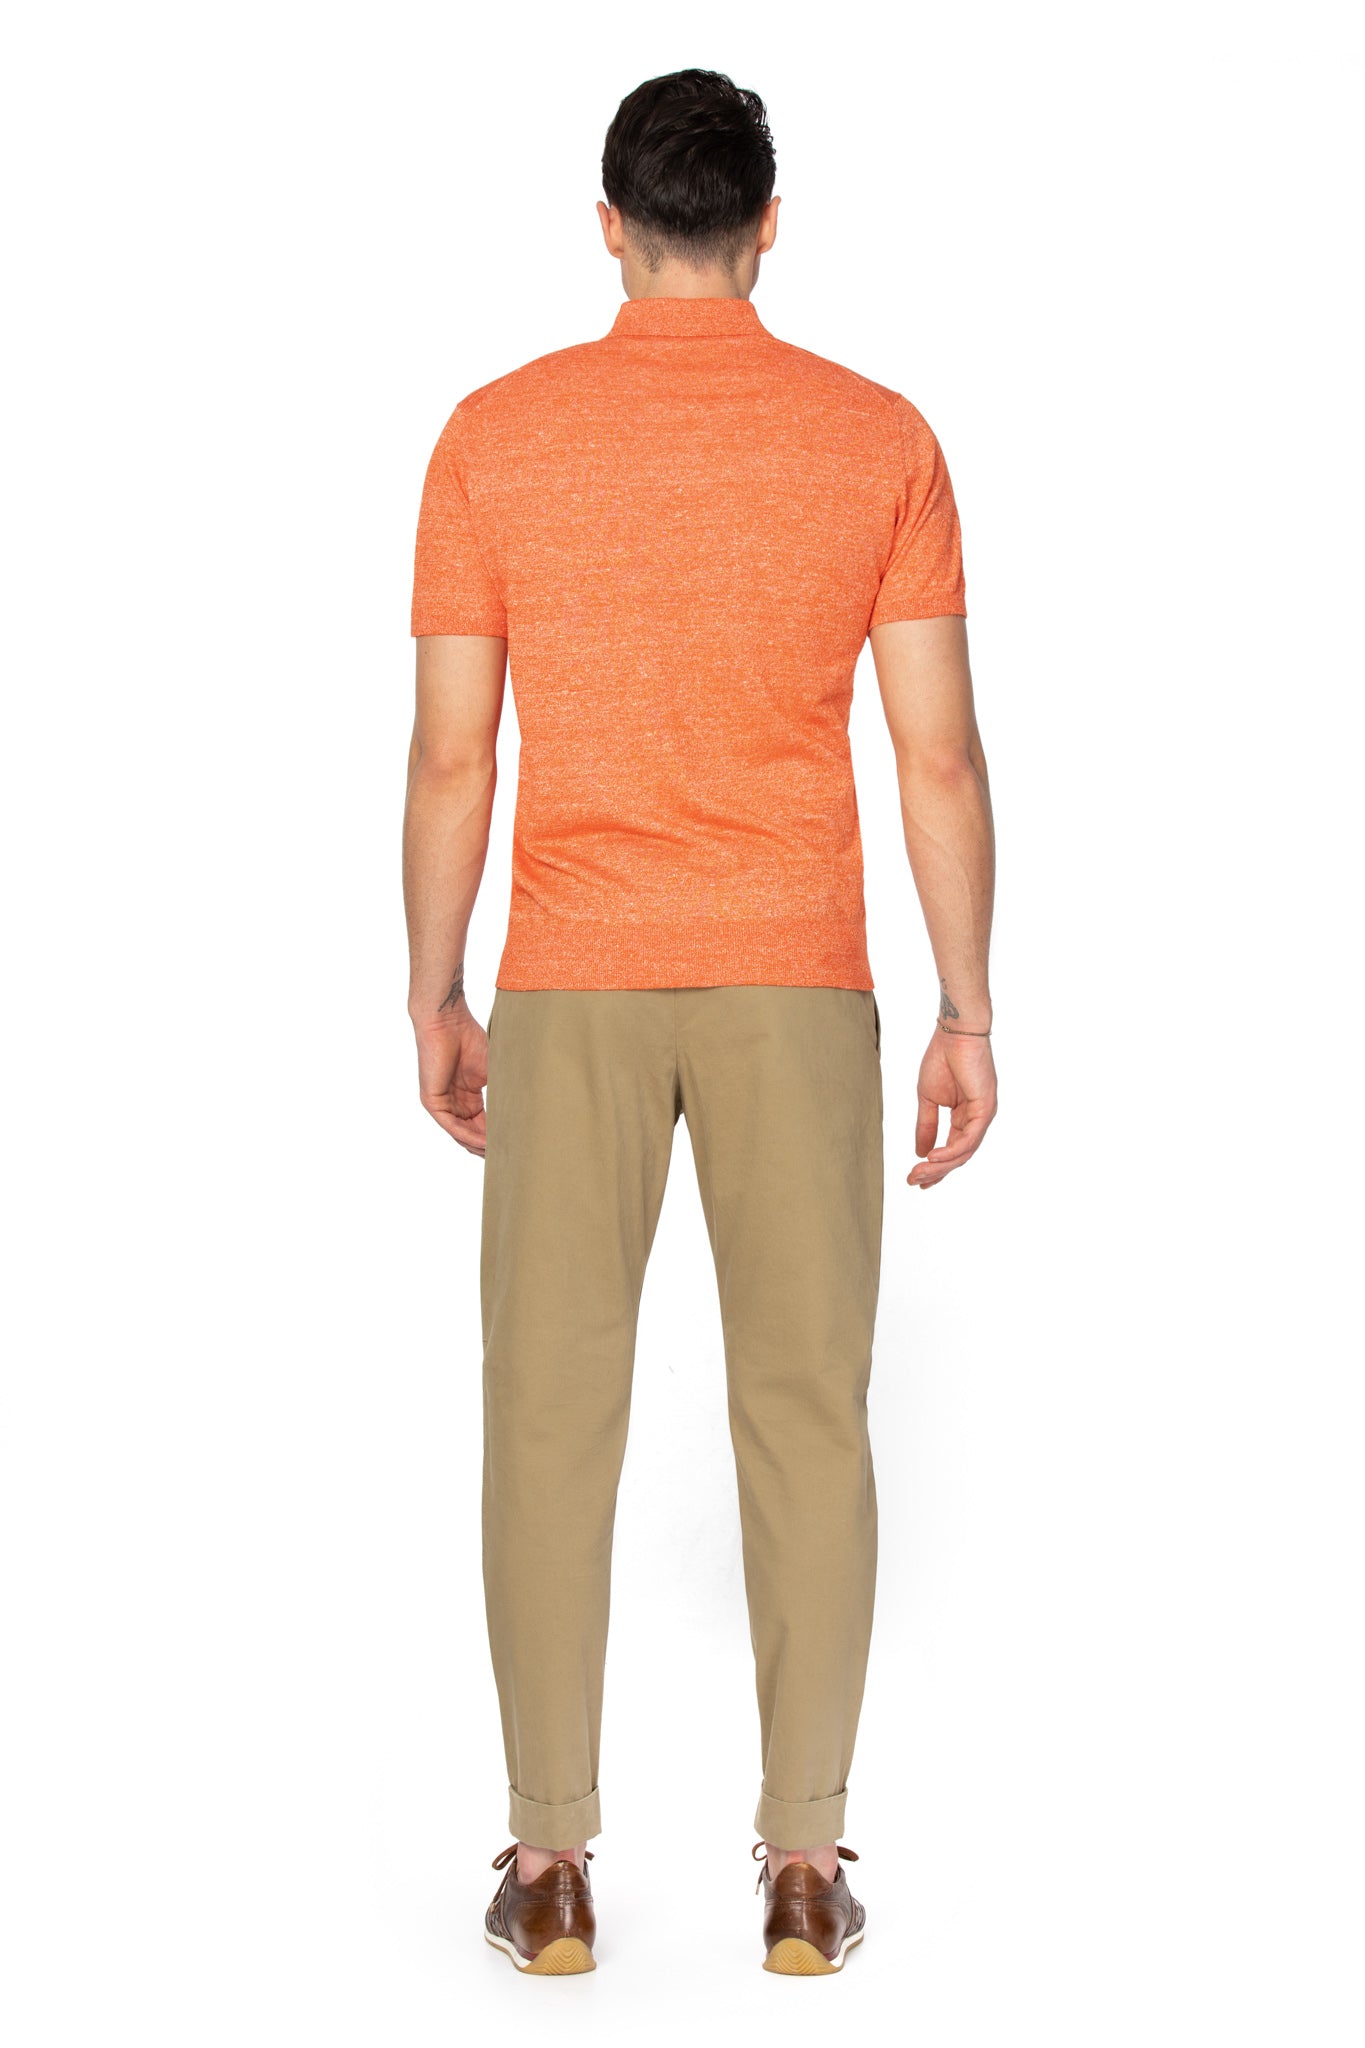 Orange polo shirt made of merino wool and linen